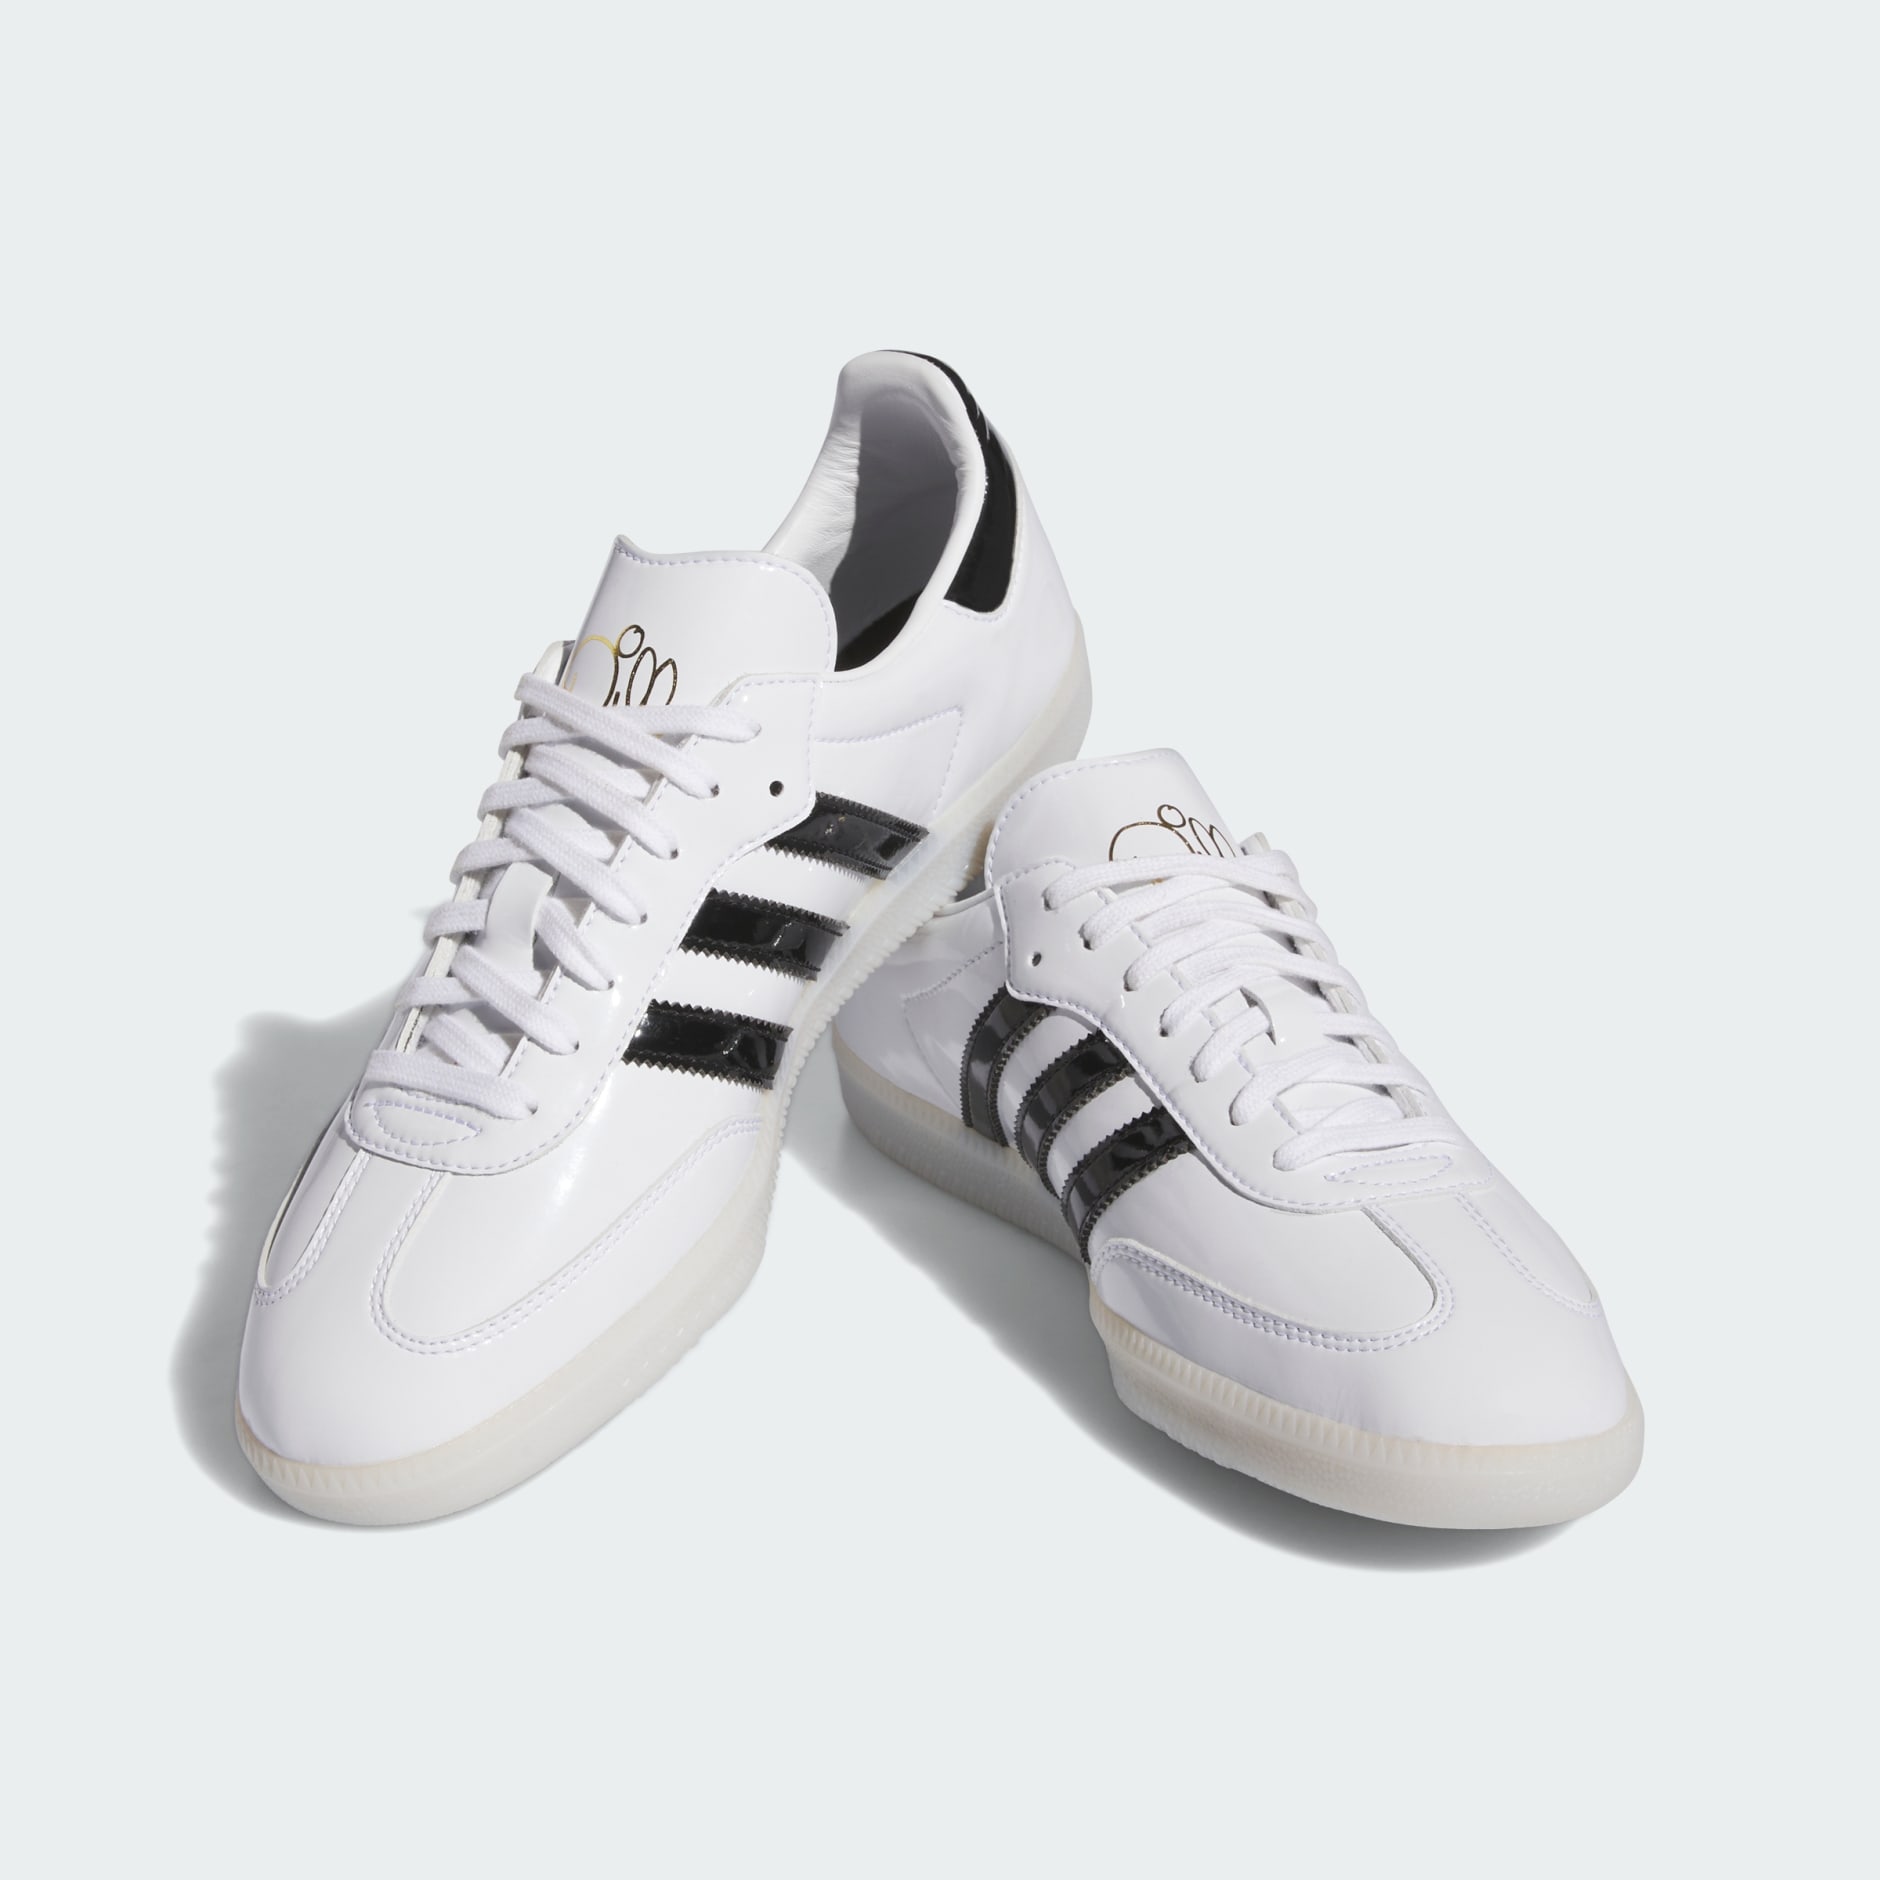 Shoes - Dill Samba Patent Leather Shoes - White | adidas Oman